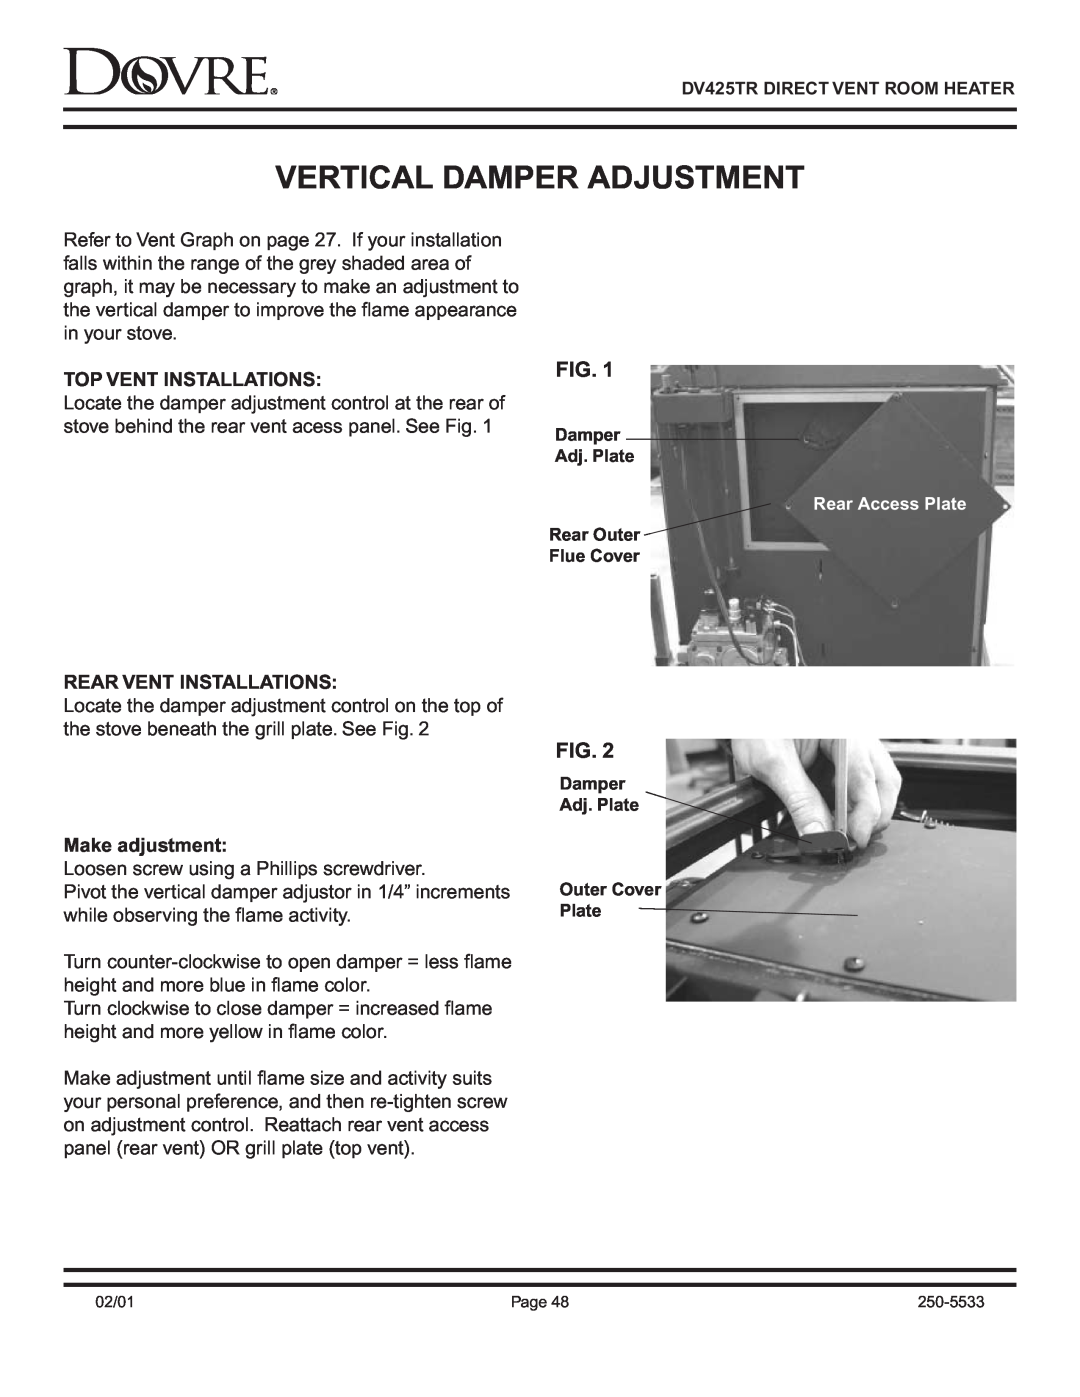 Sapphire Audio DV425TR Vertical Damper Adjustment, Top Vent Installations, Rear Vent Installations, Make adjustment 